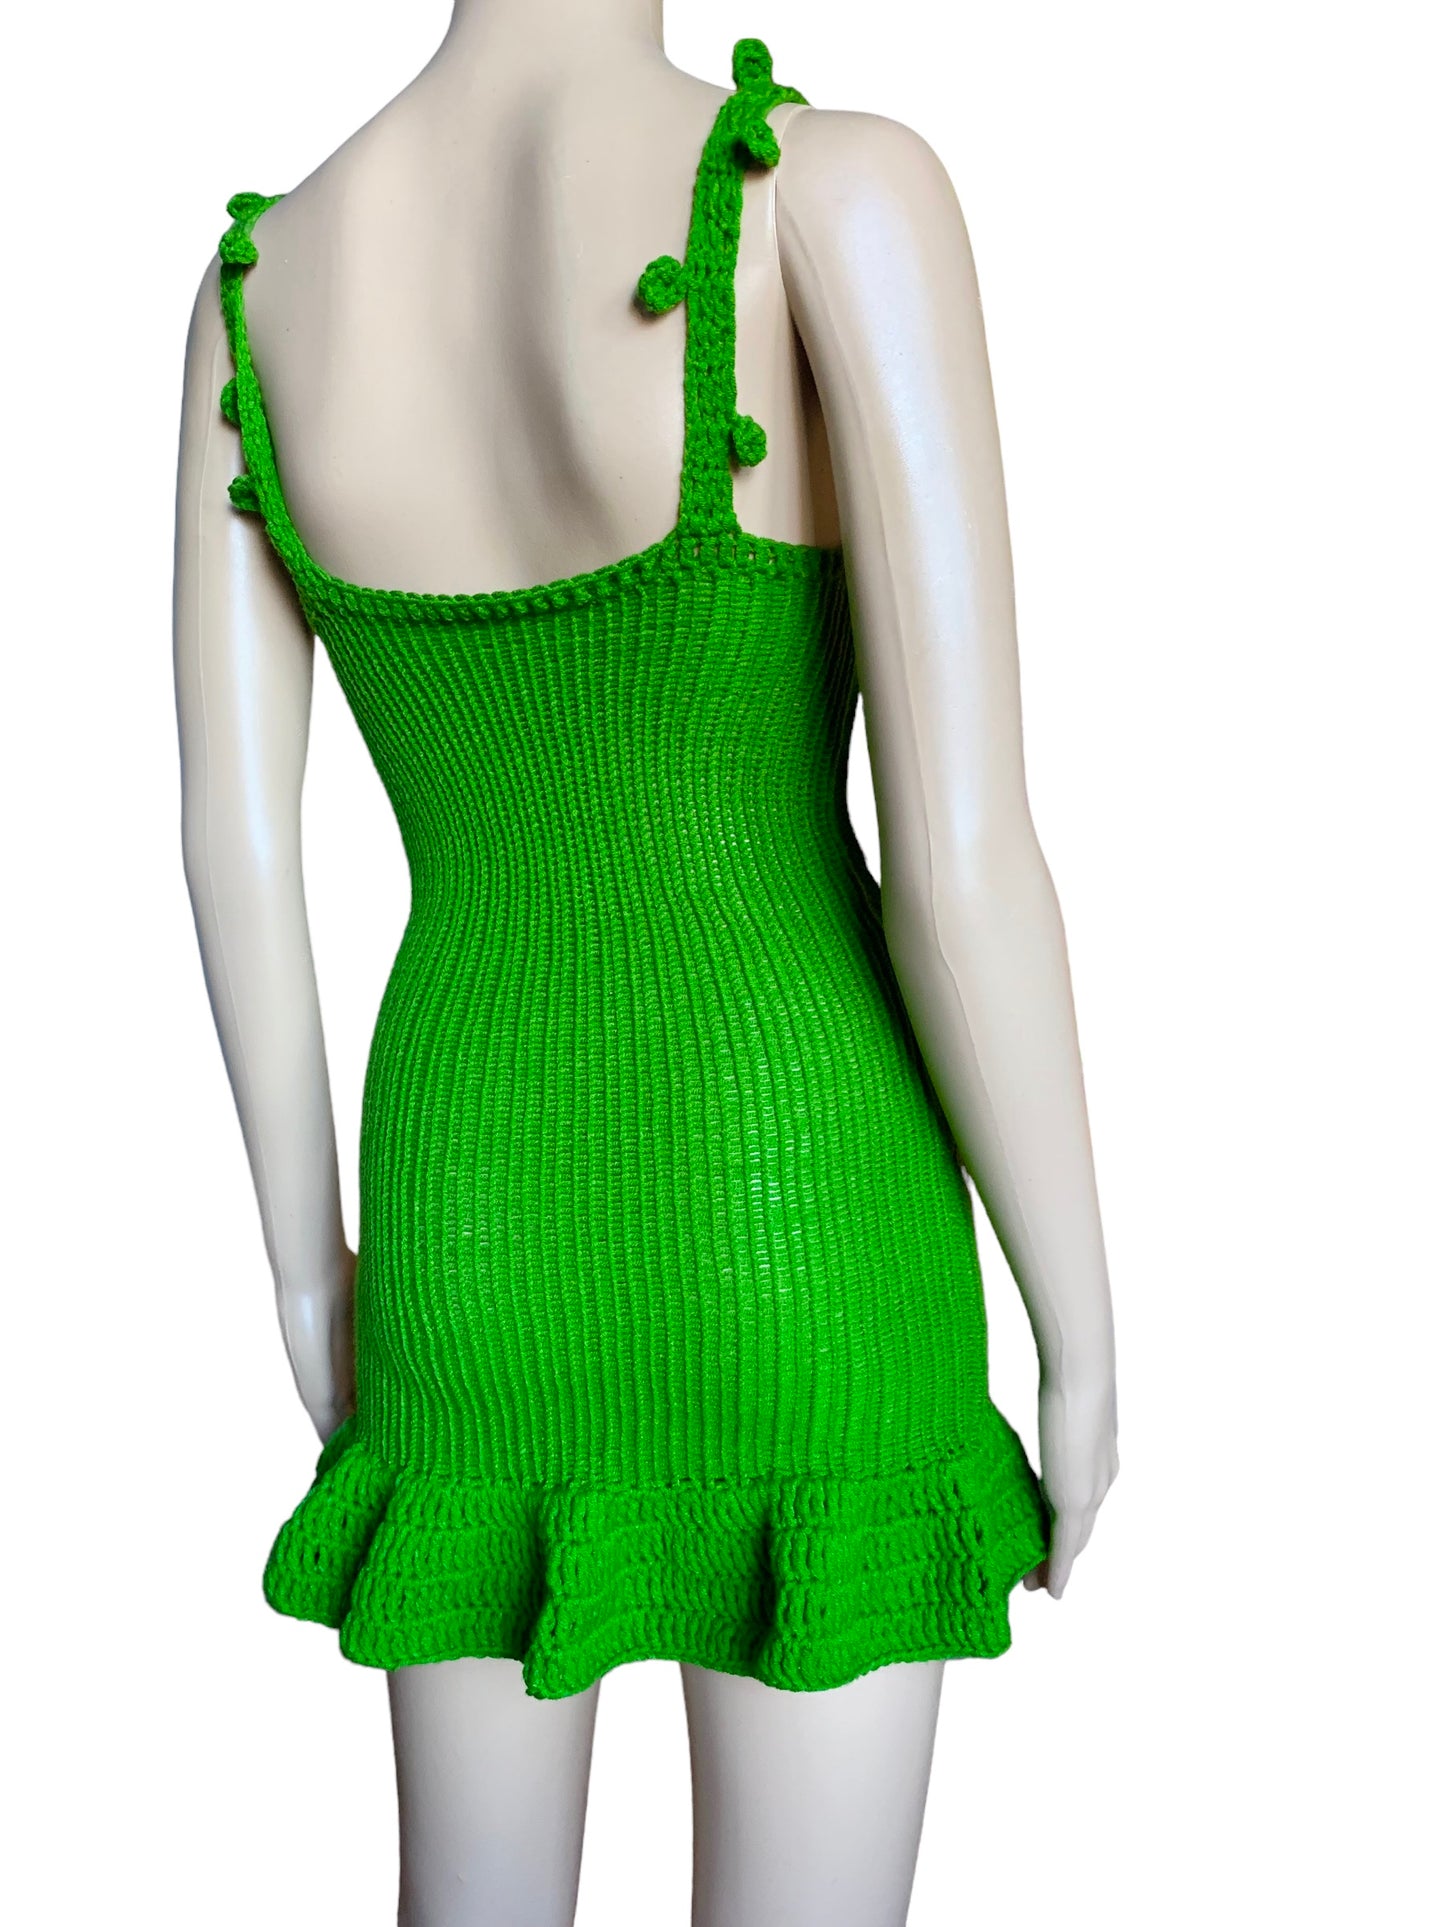 Rosa Knitted x Crochet Dress